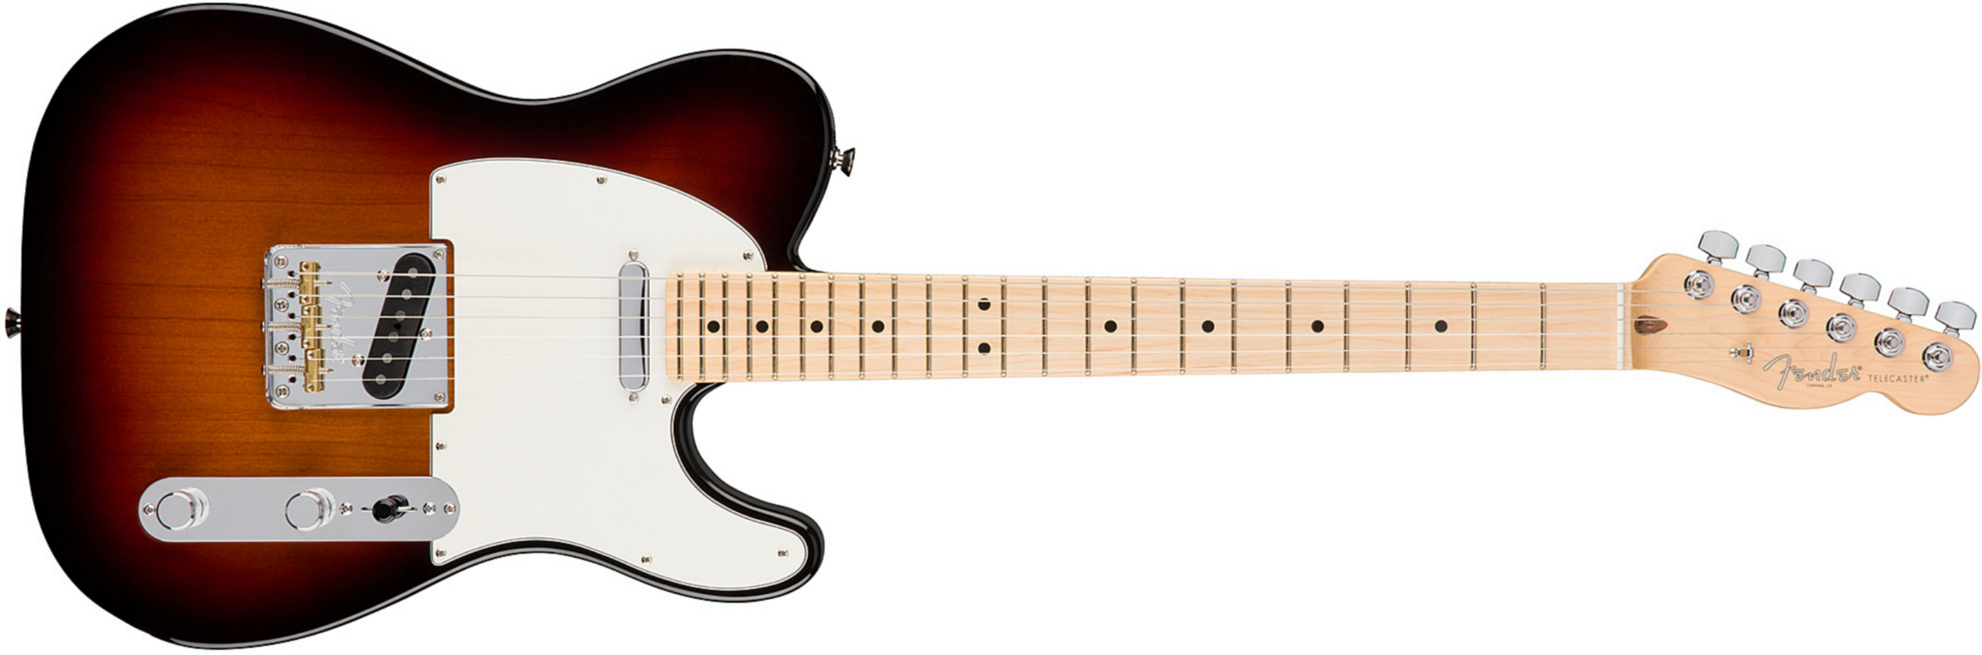 Fender Tele American Professional 2s Usa Mn - 3-color Sunburst - Televorm elektrische gitaar - Main picture